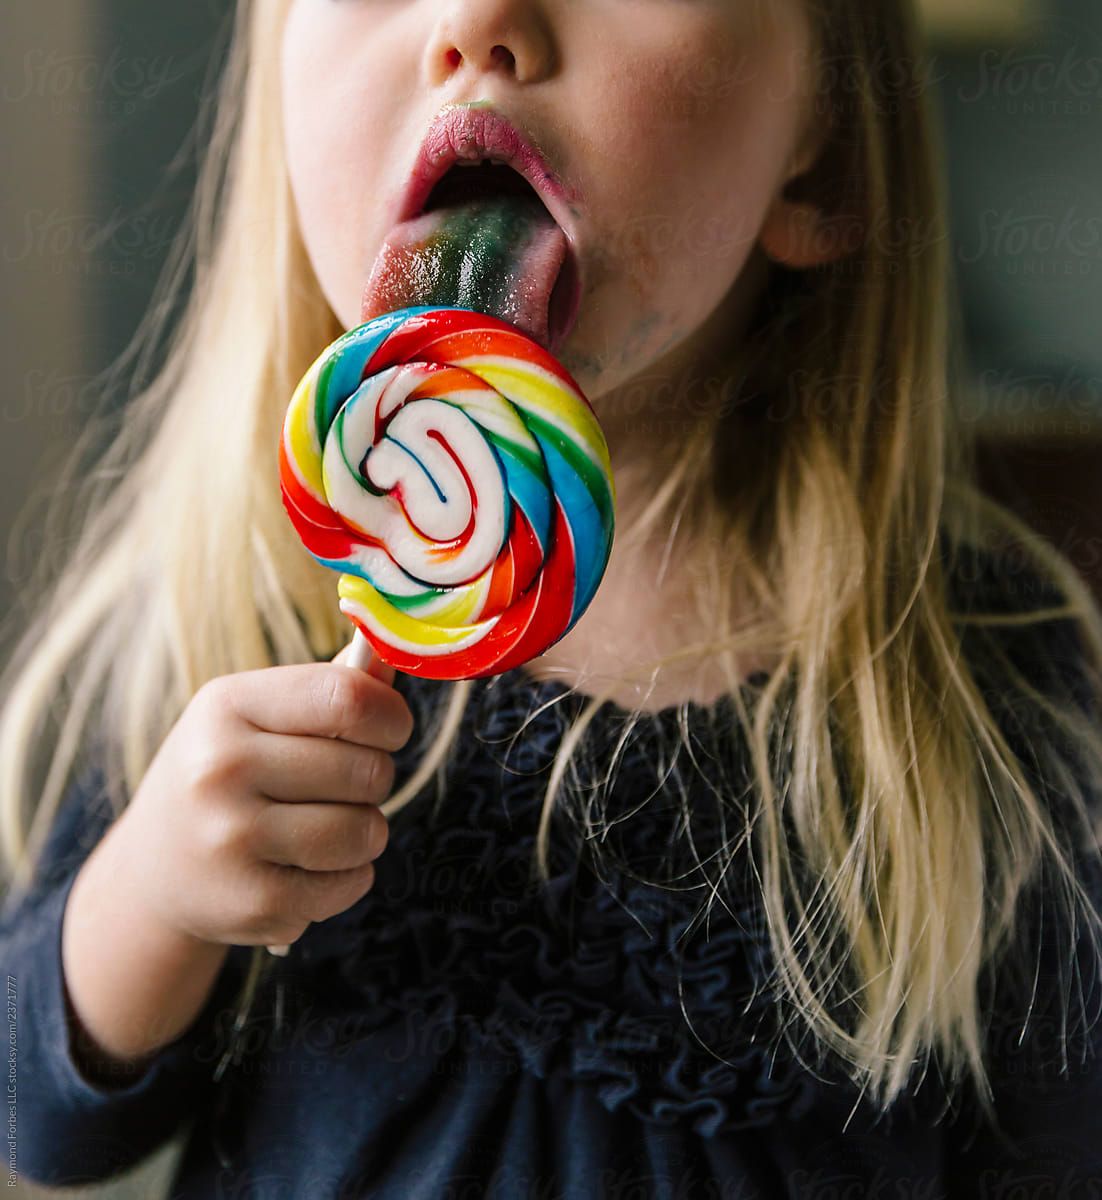 danielle nicole rogers add licking a lollipop photo